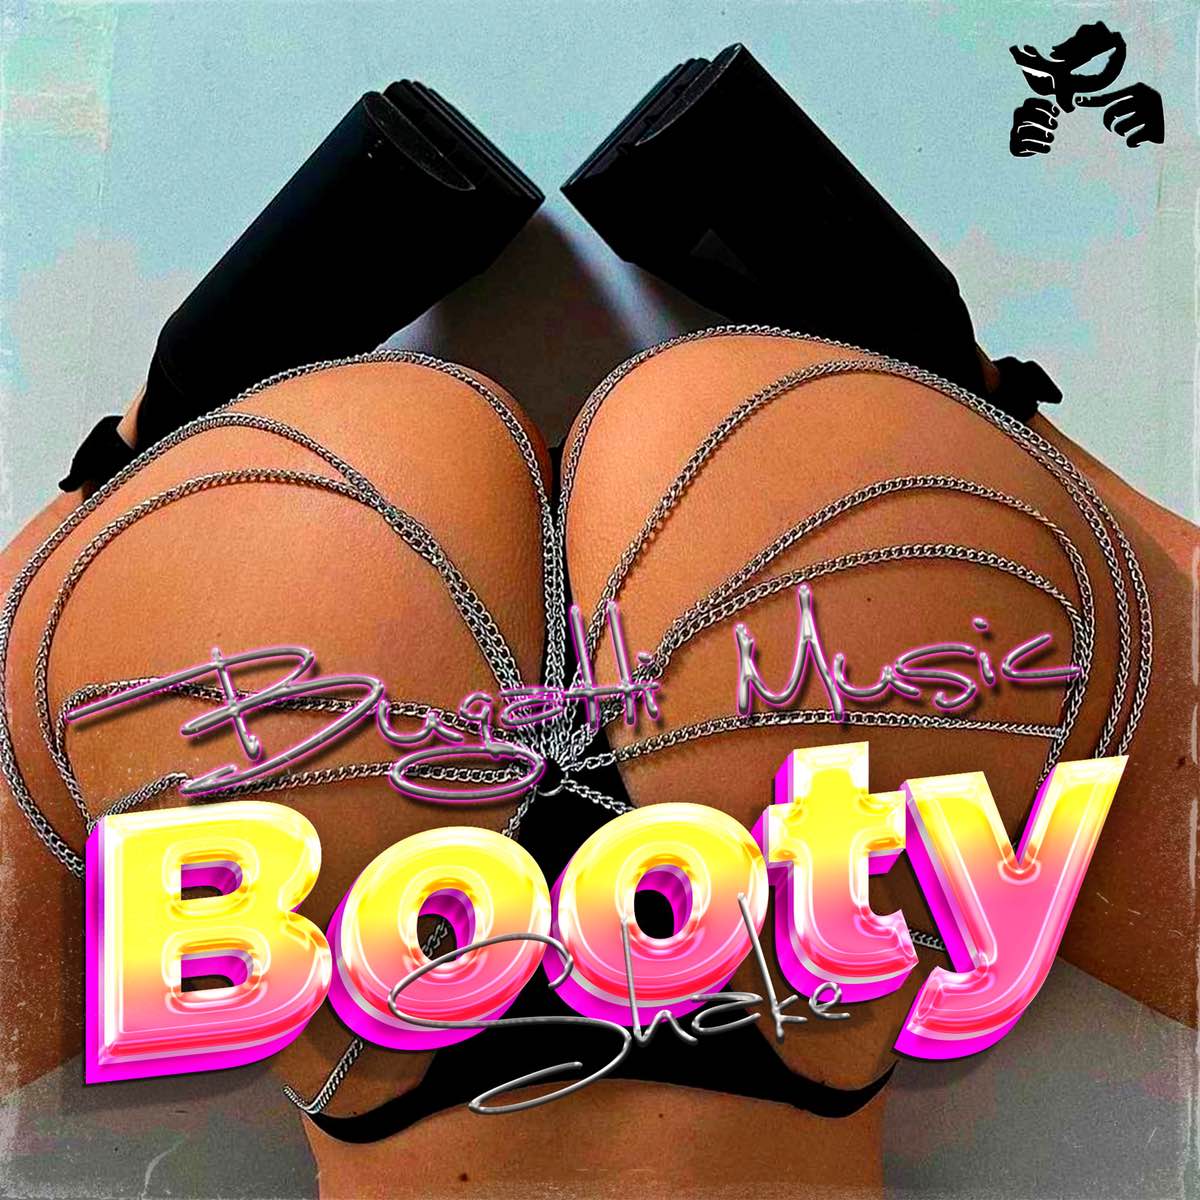 Bugatti Music - Booty Shake (Extended Mix)